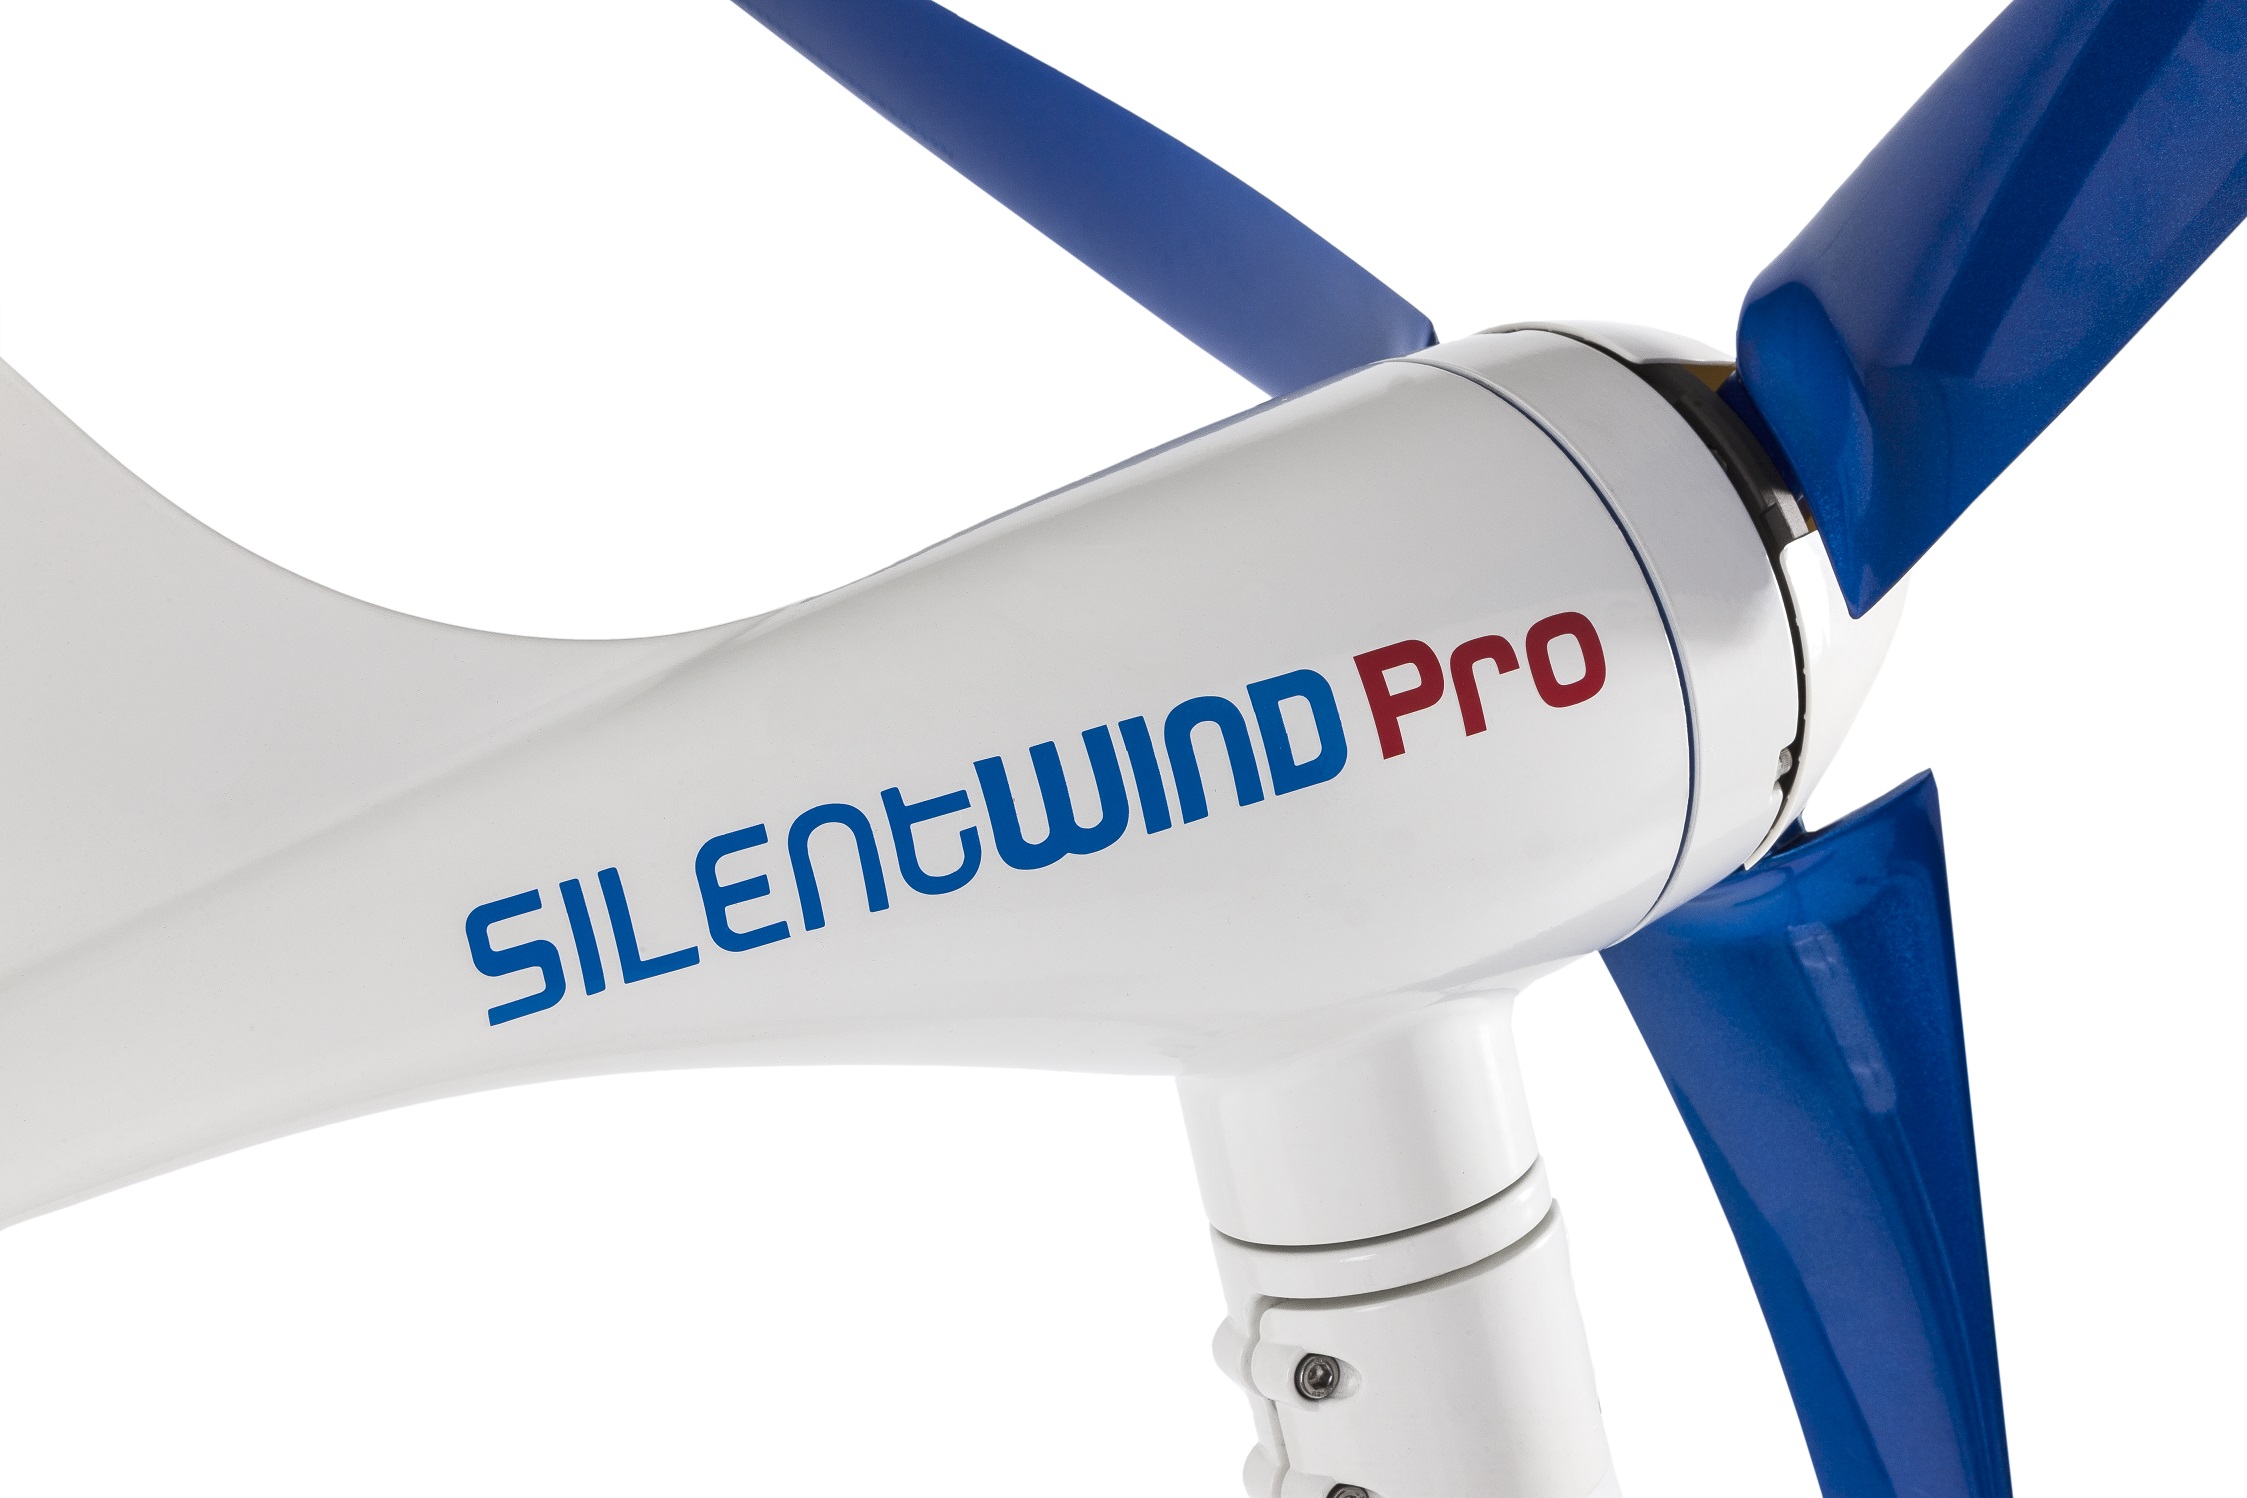 Silentwind Windgenerator 400+ 24V I Photovoltaik4all Shop